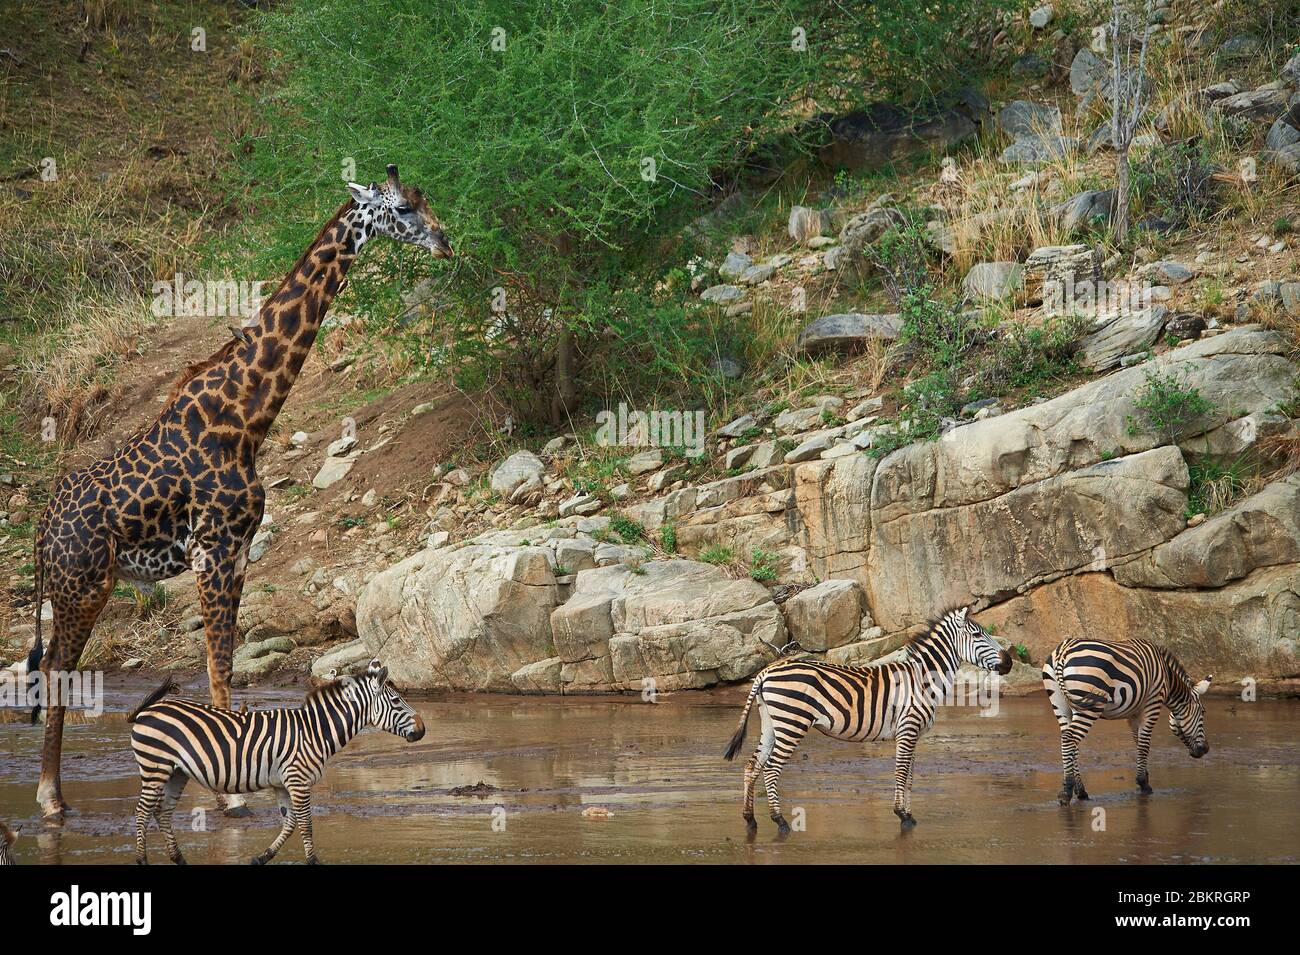 Une grande girafe surplombant des zèbres dans un endroit aquatique de la vallée de Tarangire Banque D'Images